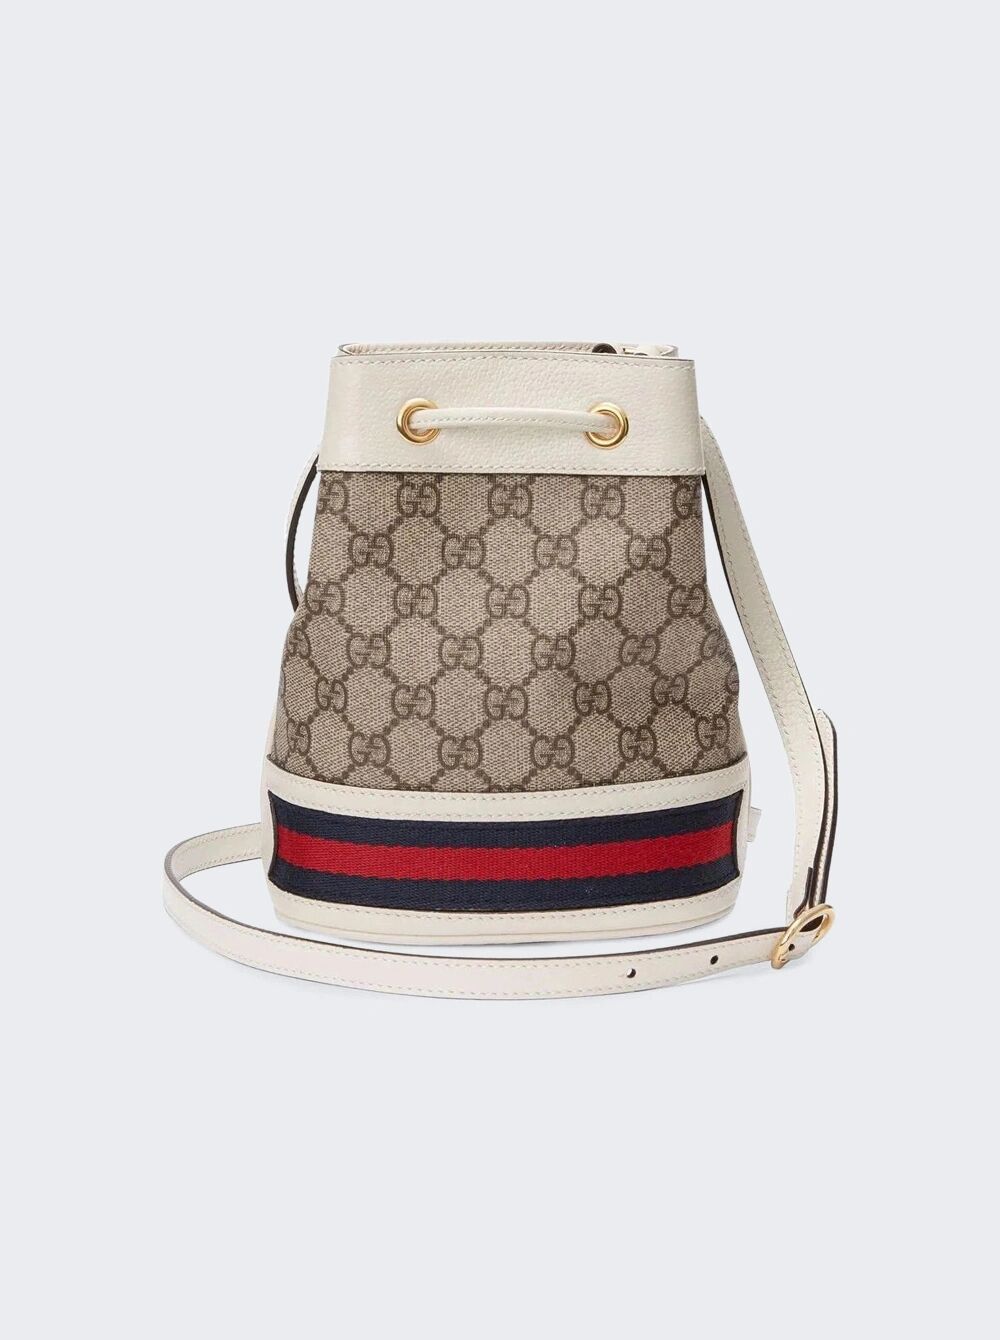 Gucci Ophidia Canvas Handbag - White - female - Size: OS